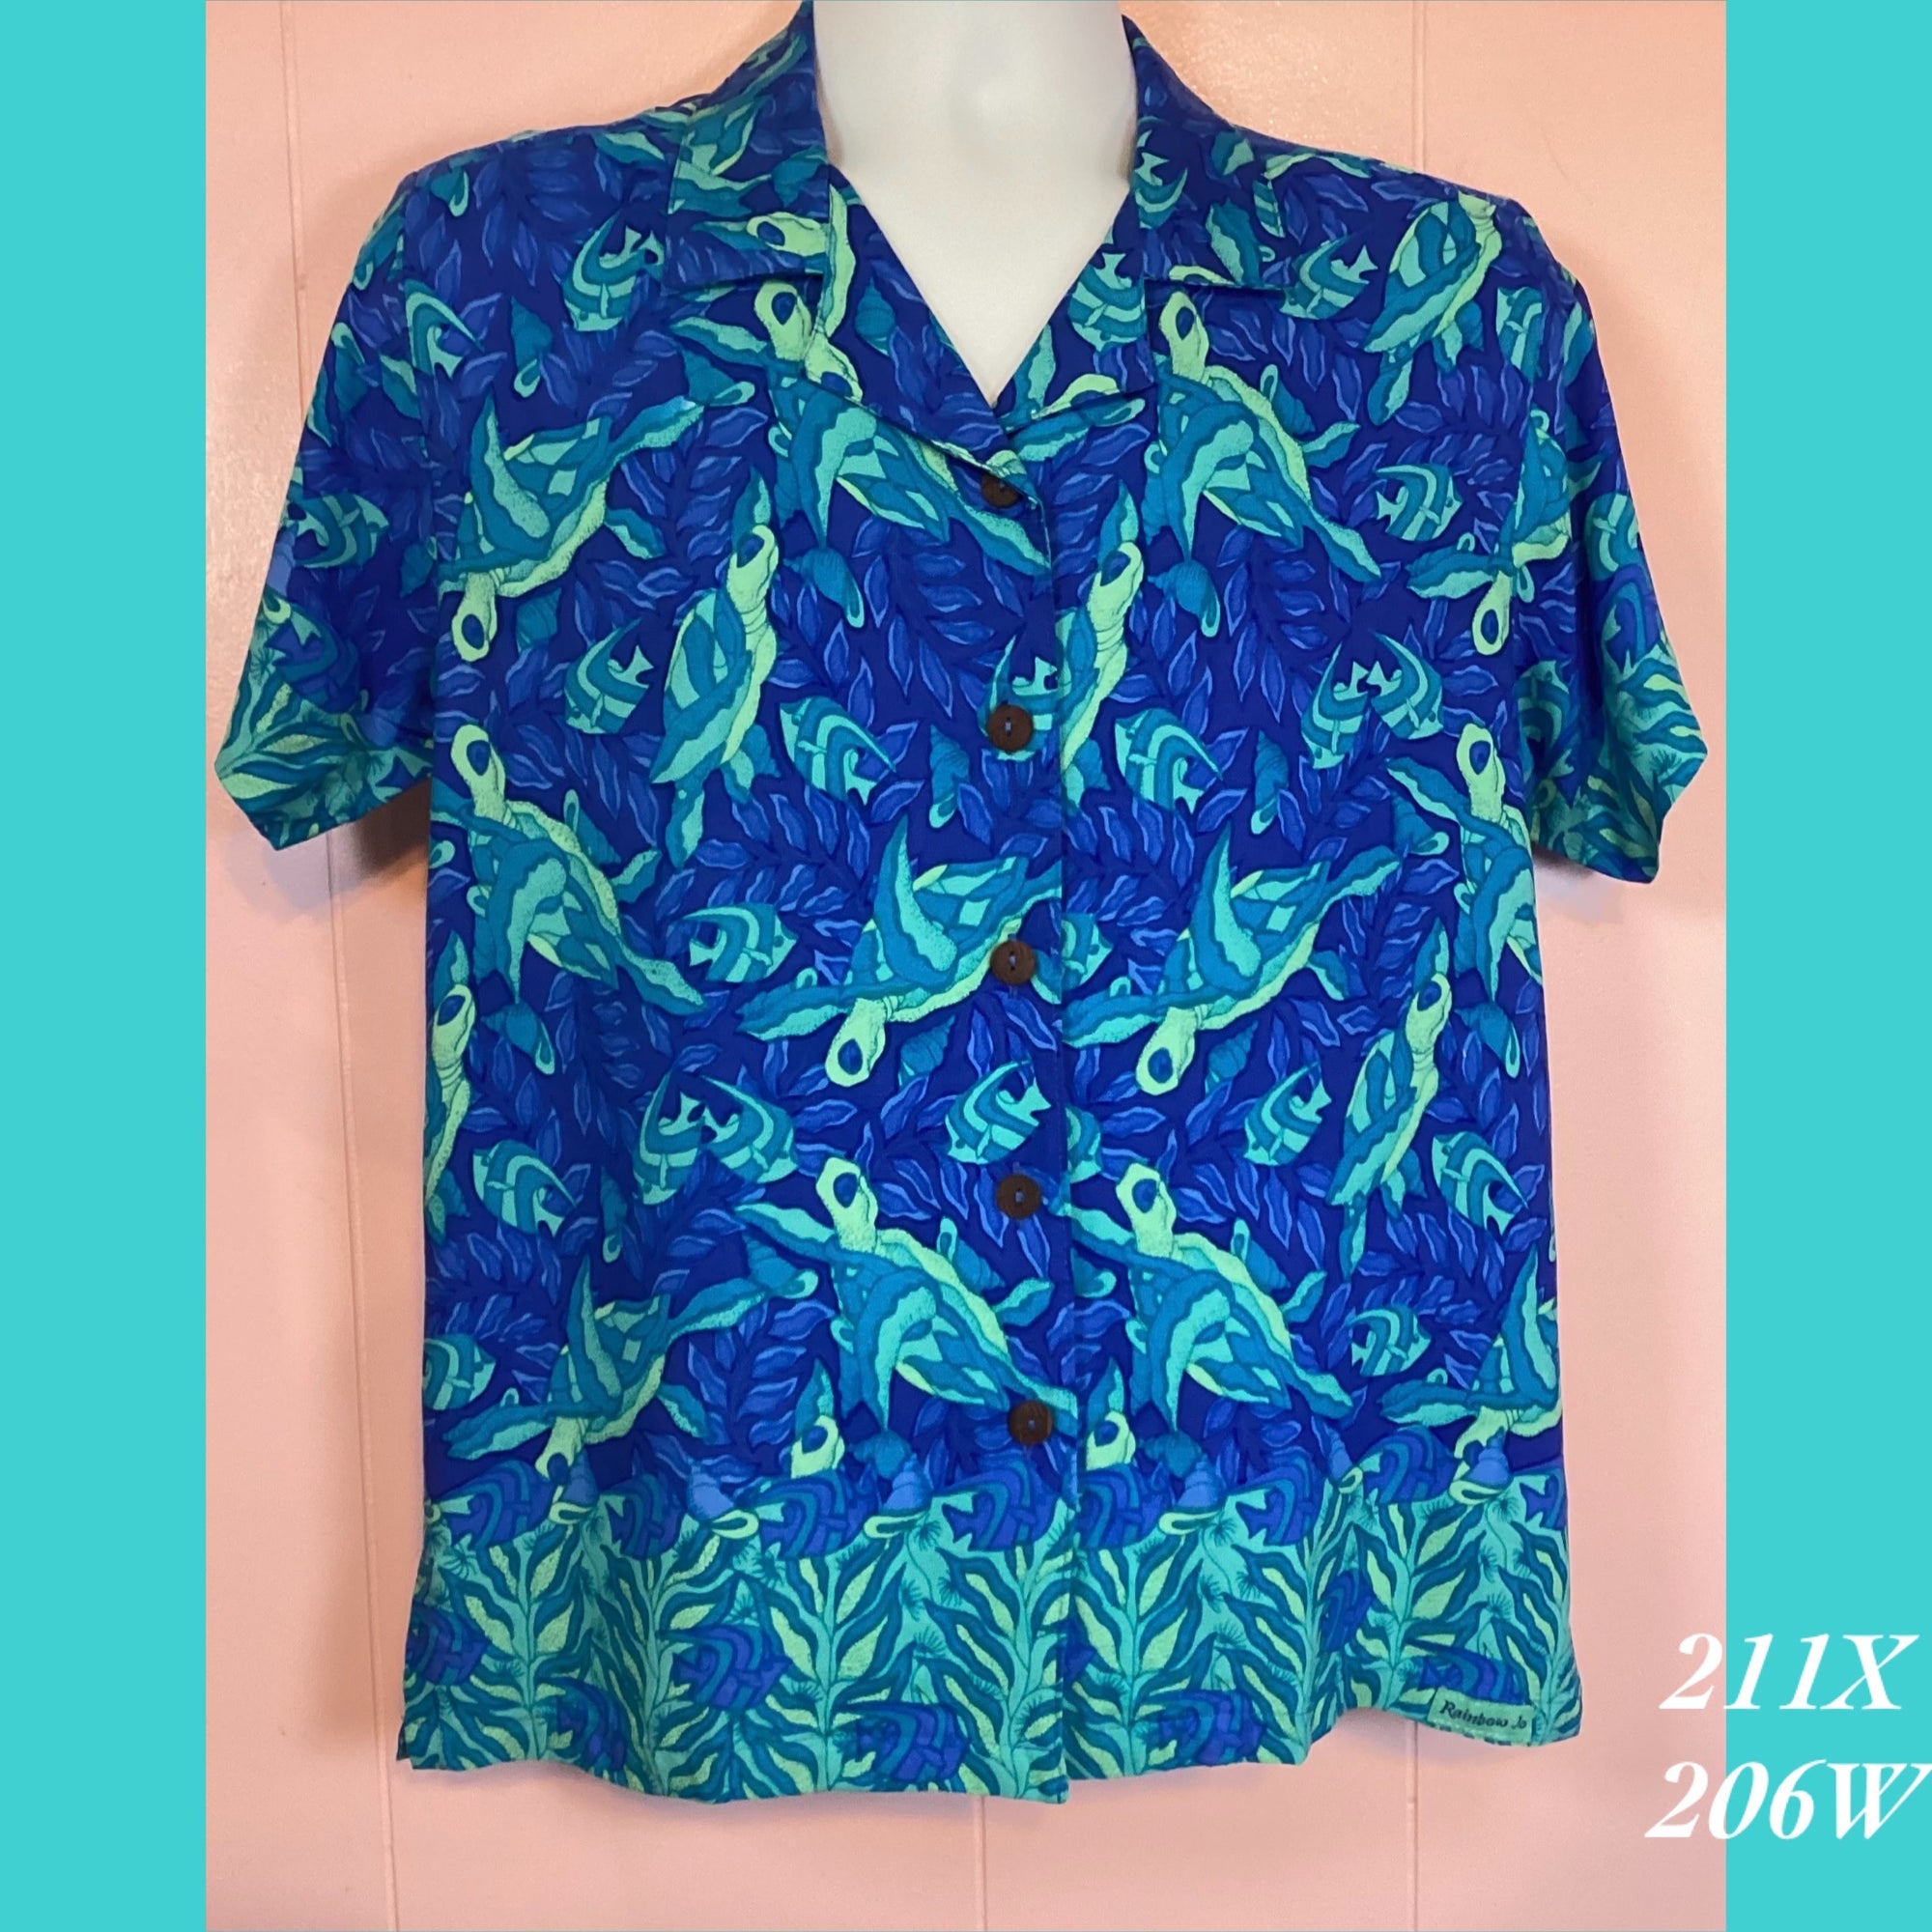 211X - 206W , Women's Aloha shirt plus size